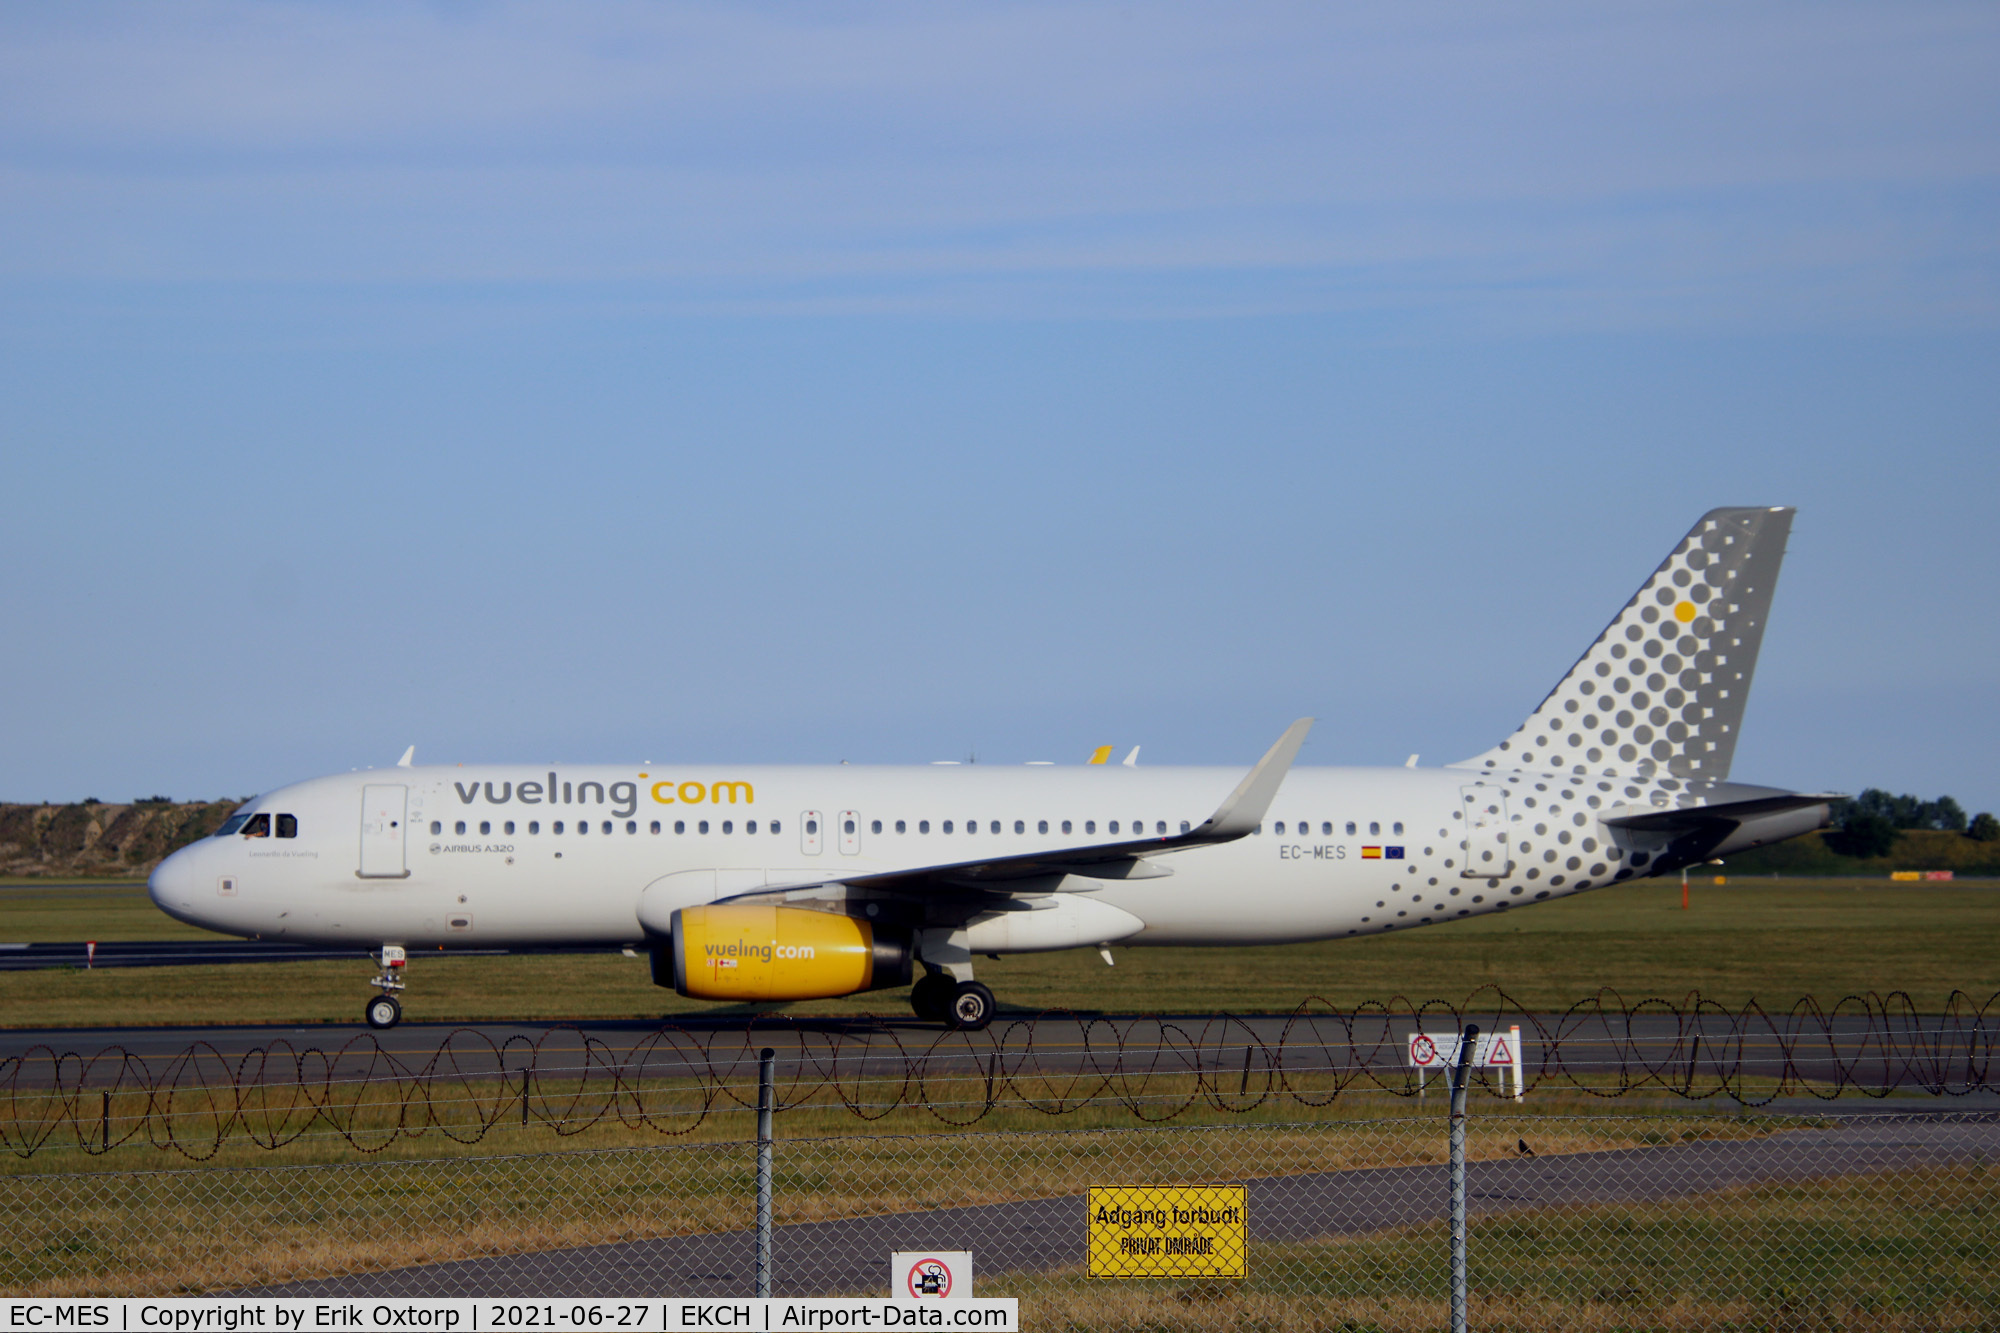 EC-MES, 2015 Airbus A320-232 C/N 6518, EC-MES landing fw 04L